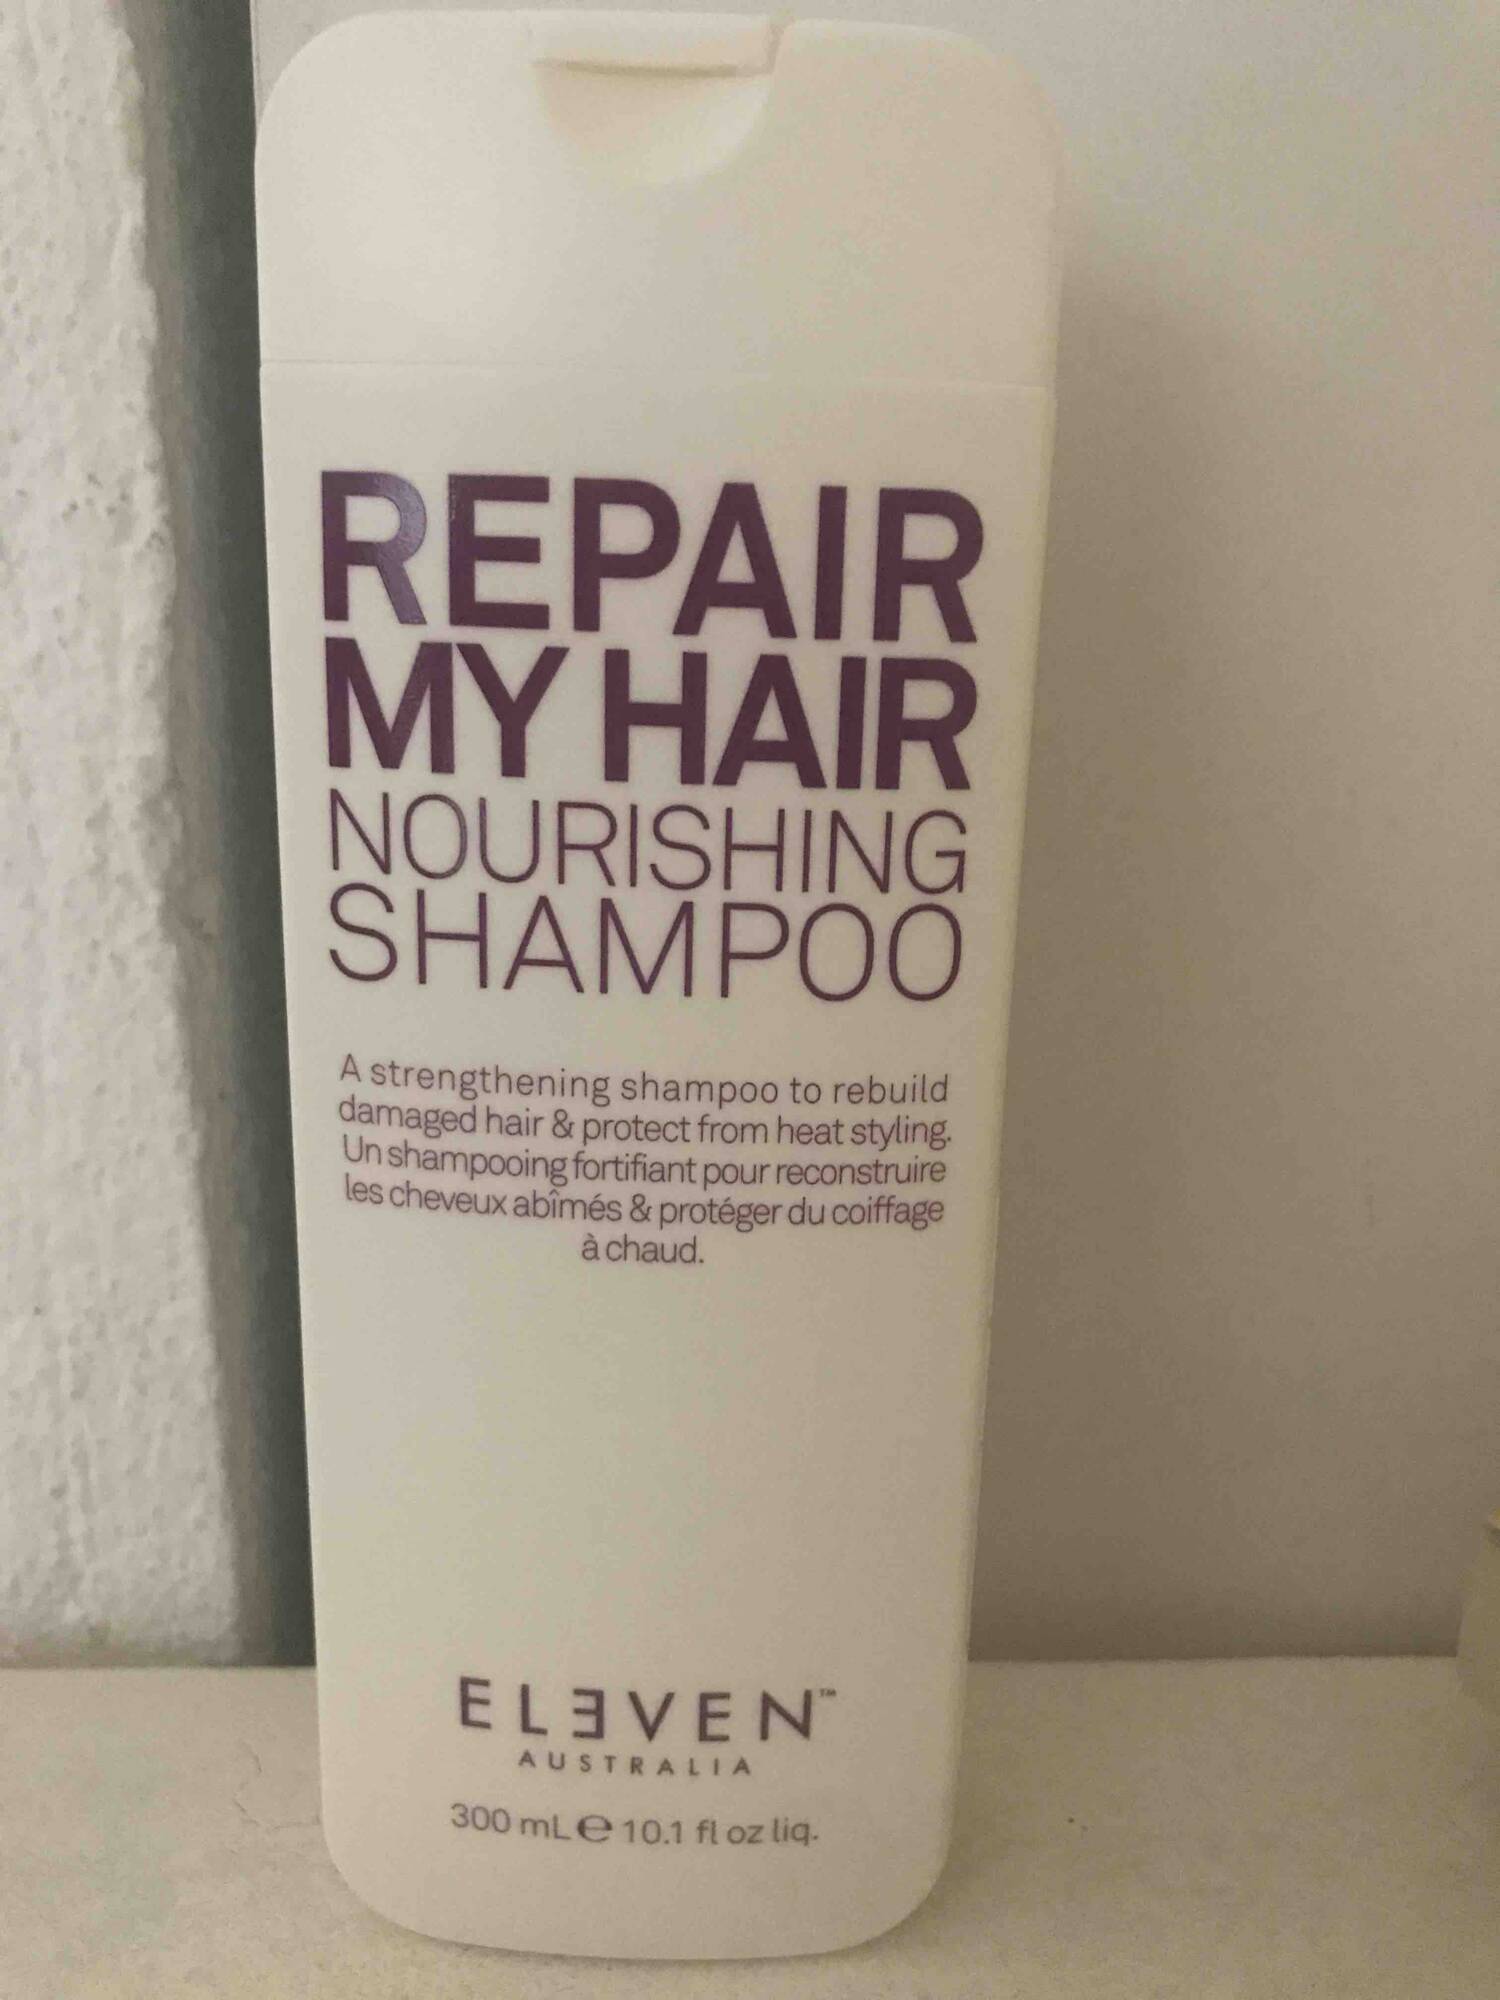 ELEVEN AUSTRALIA - Repair my hair - Nourishing shampoo